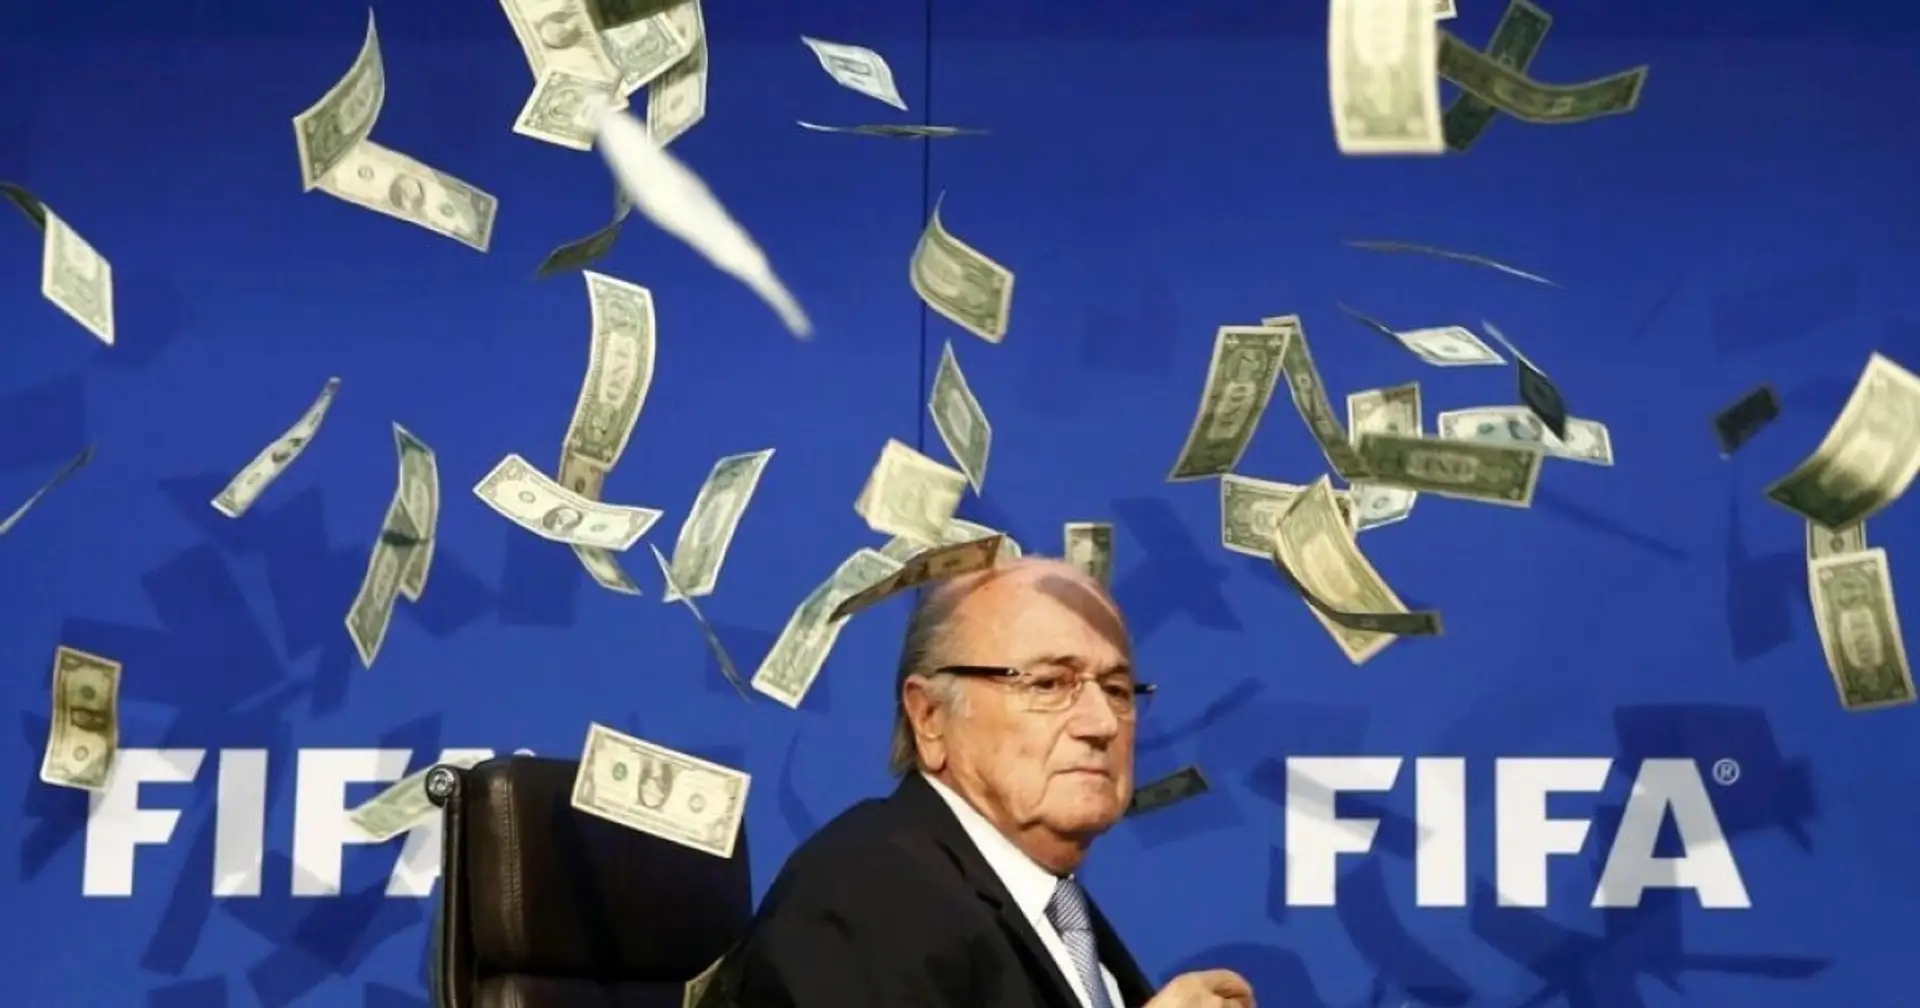 L'ex Presidente FIFA Blatter: "I Mondiali 2030 sono assurdi"